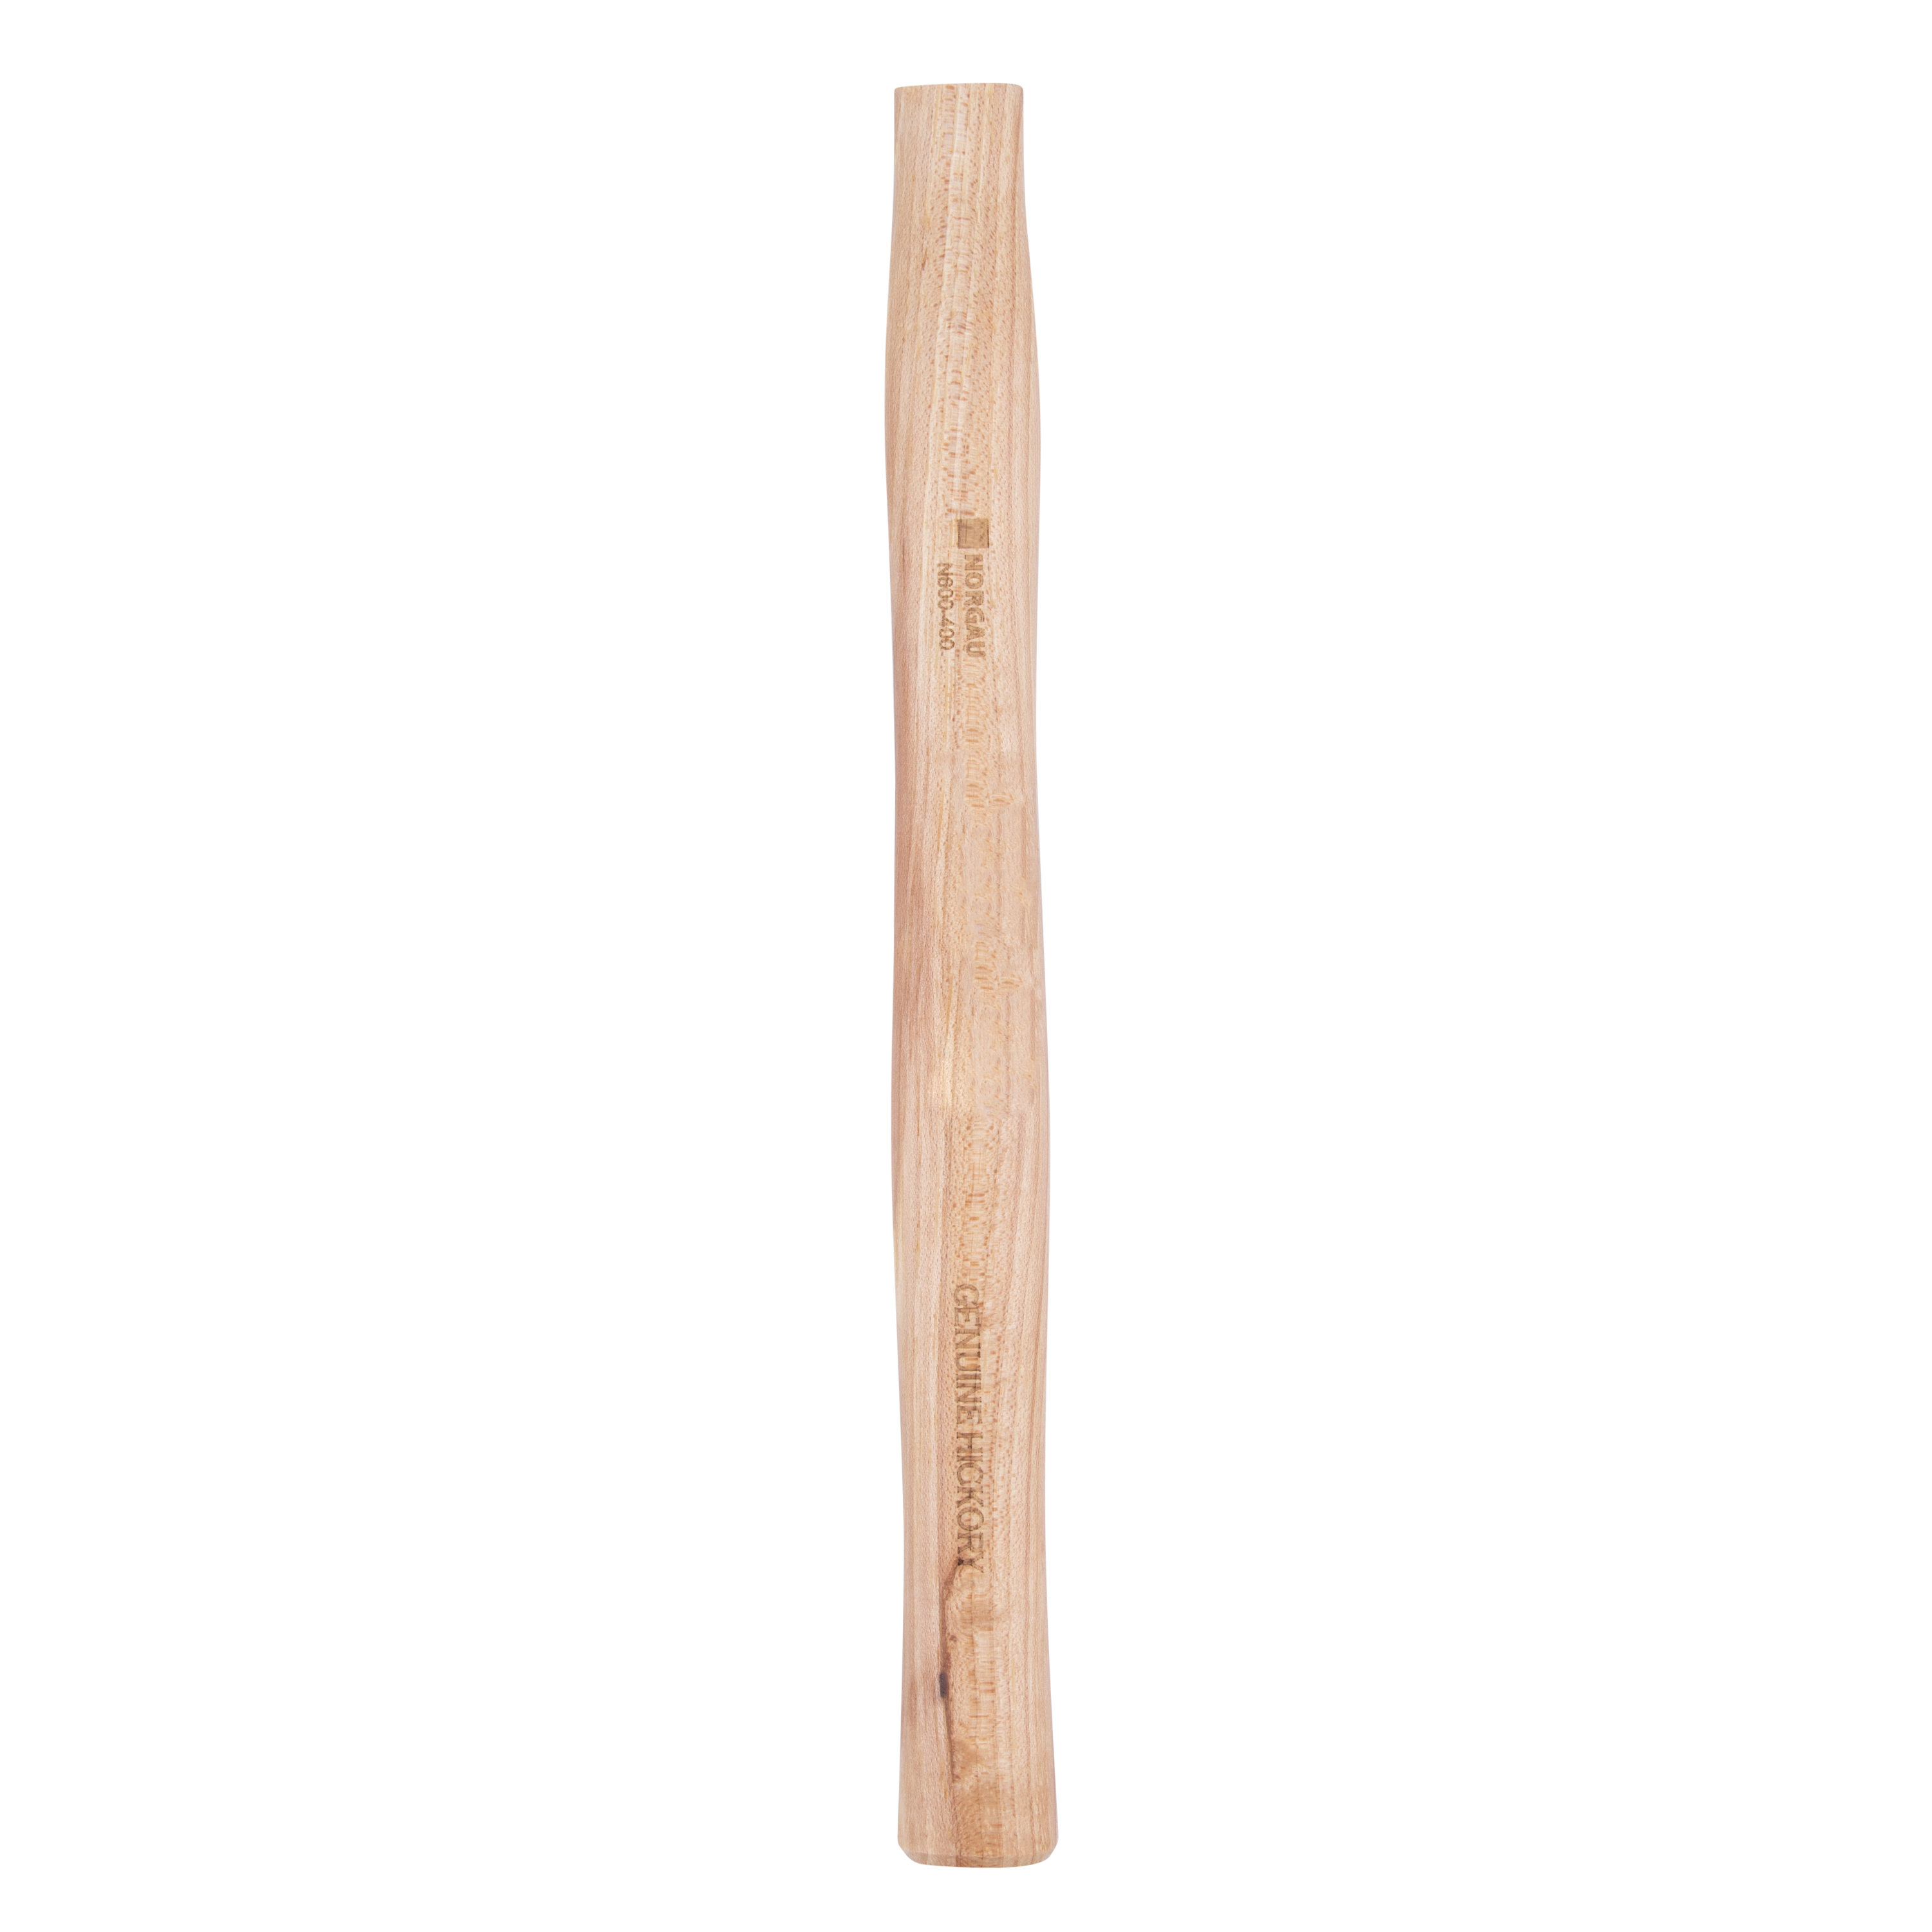 Рукоятка NORGAU Industrial запаснаядля молотка 400 г, из древесины гикори, 300 мм рукоятка norgau